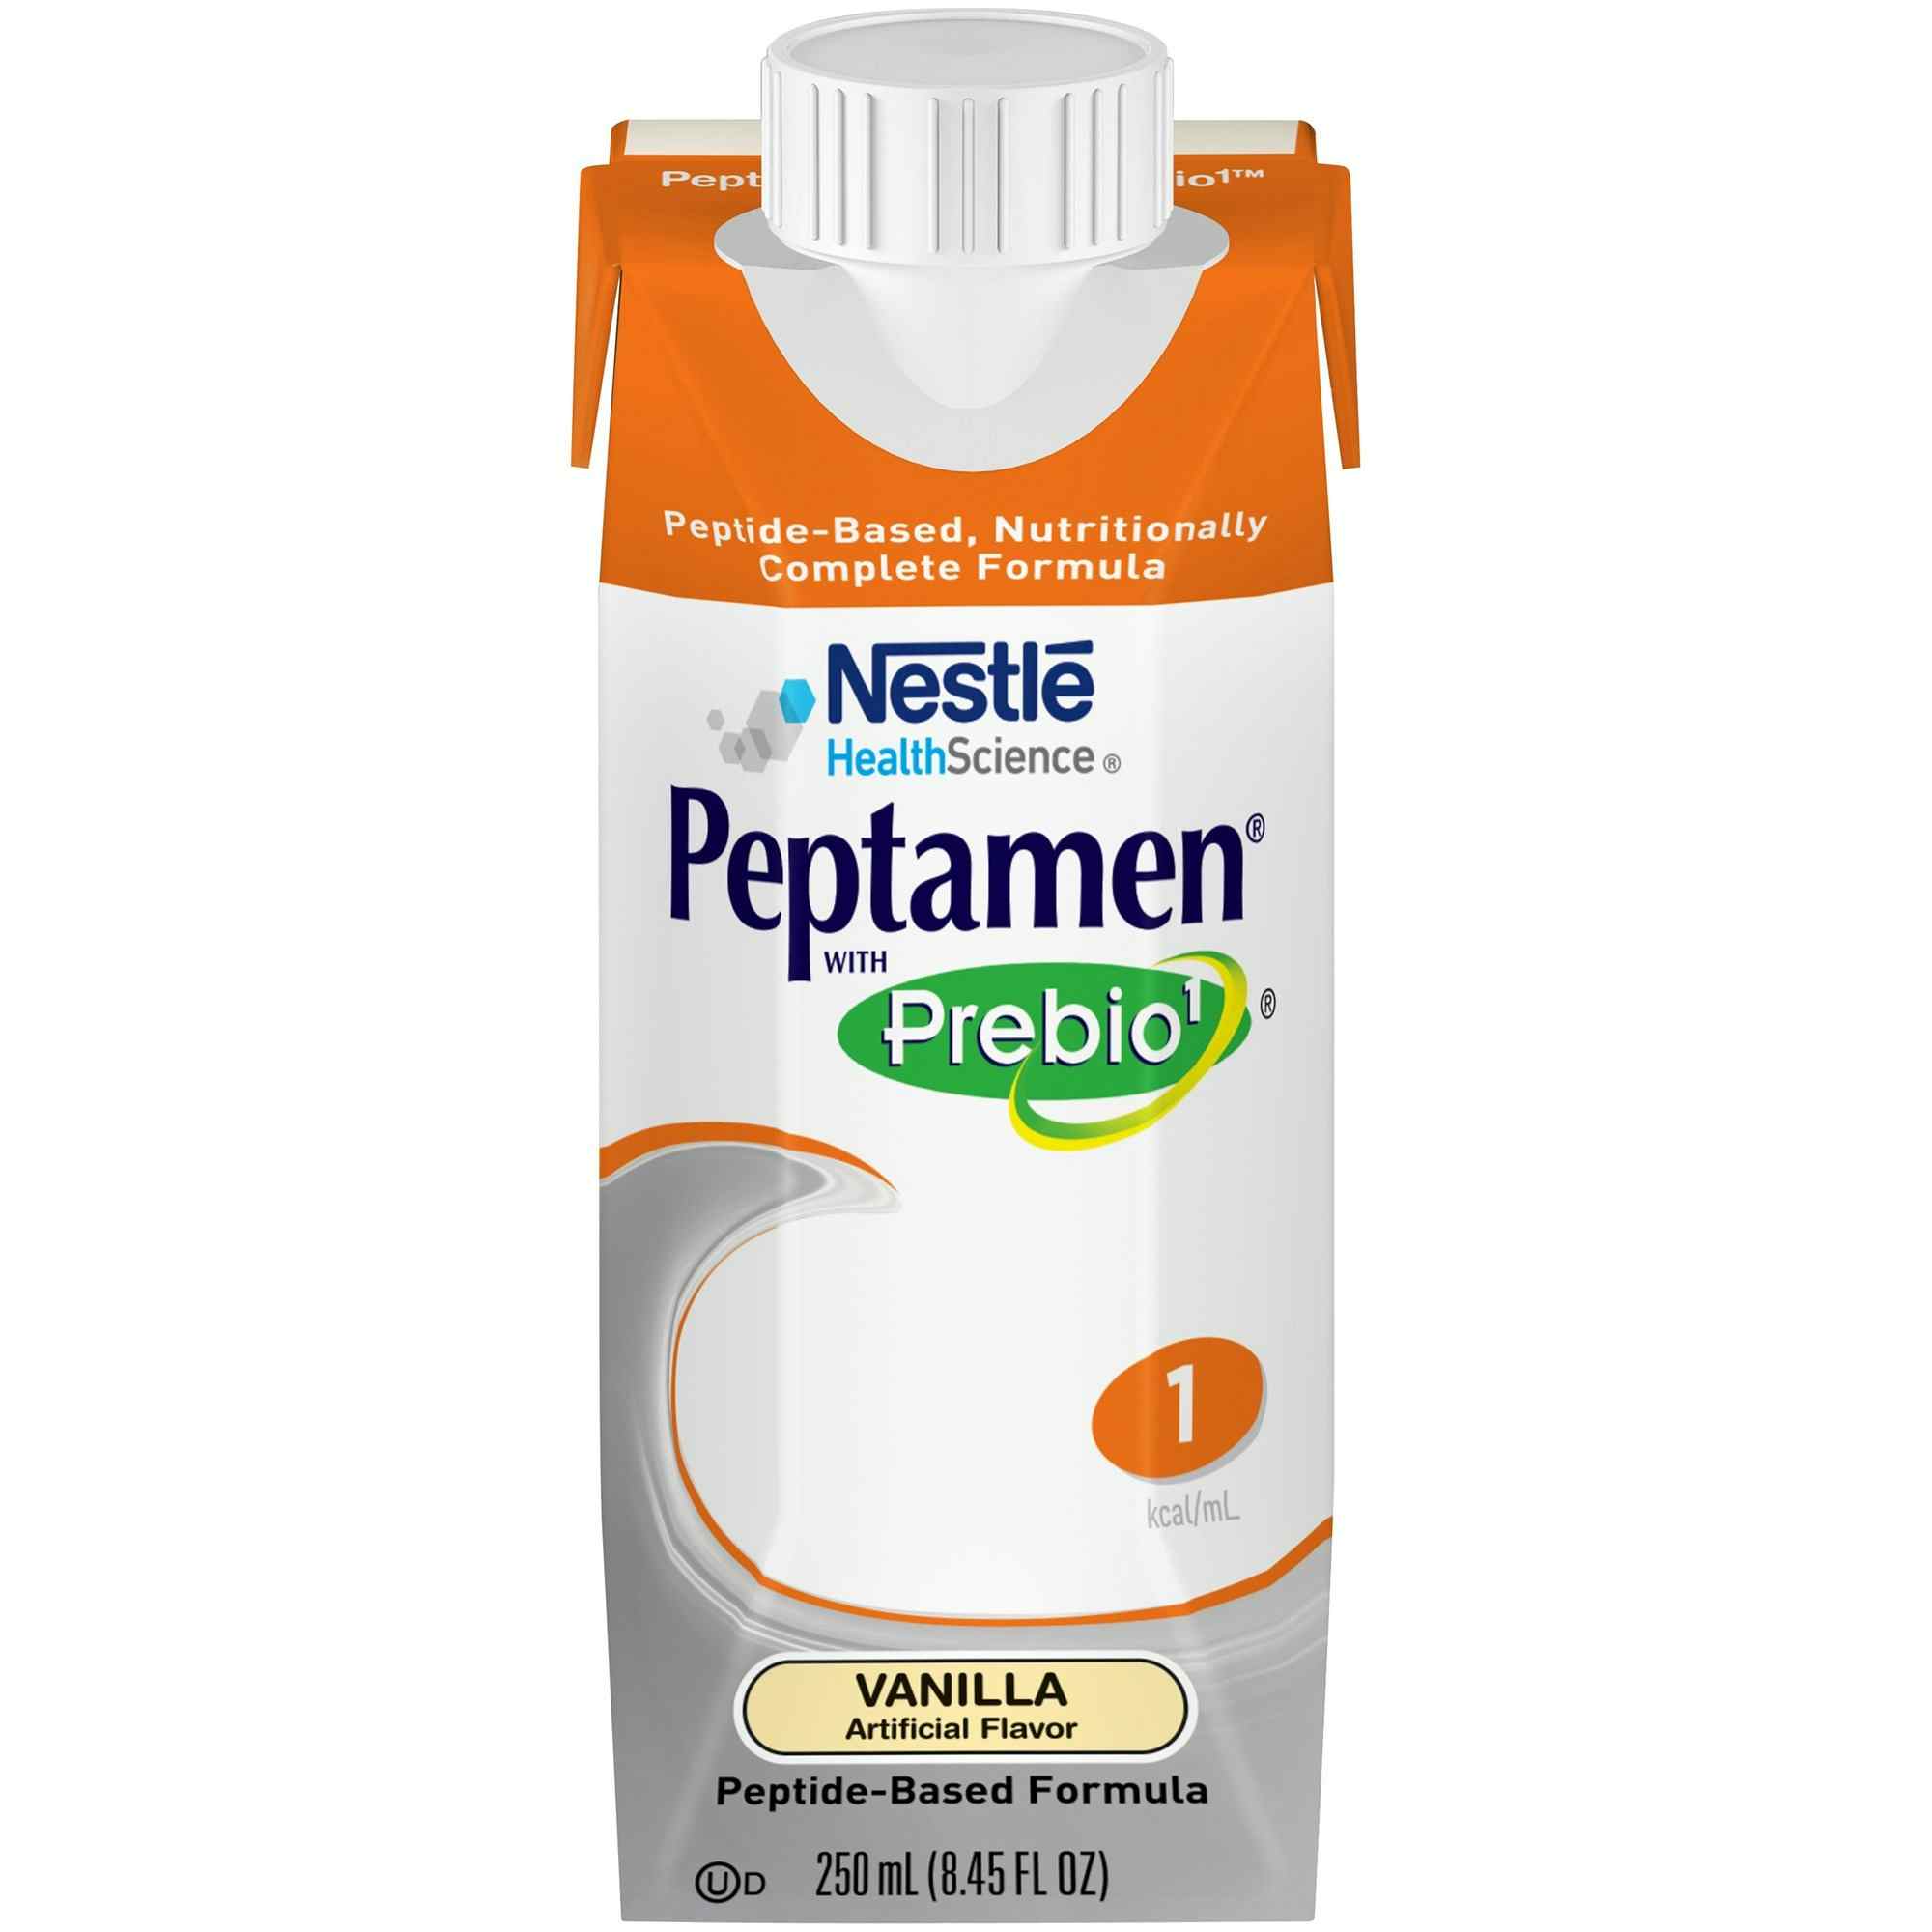 Nestle HealthScience Peptamen with Prebio 1 Peptide-Based Calorically Dense Complete Nutrition Tube Feeding Formula, Vanilla, 250 mL, 10798716181850, Case of 24